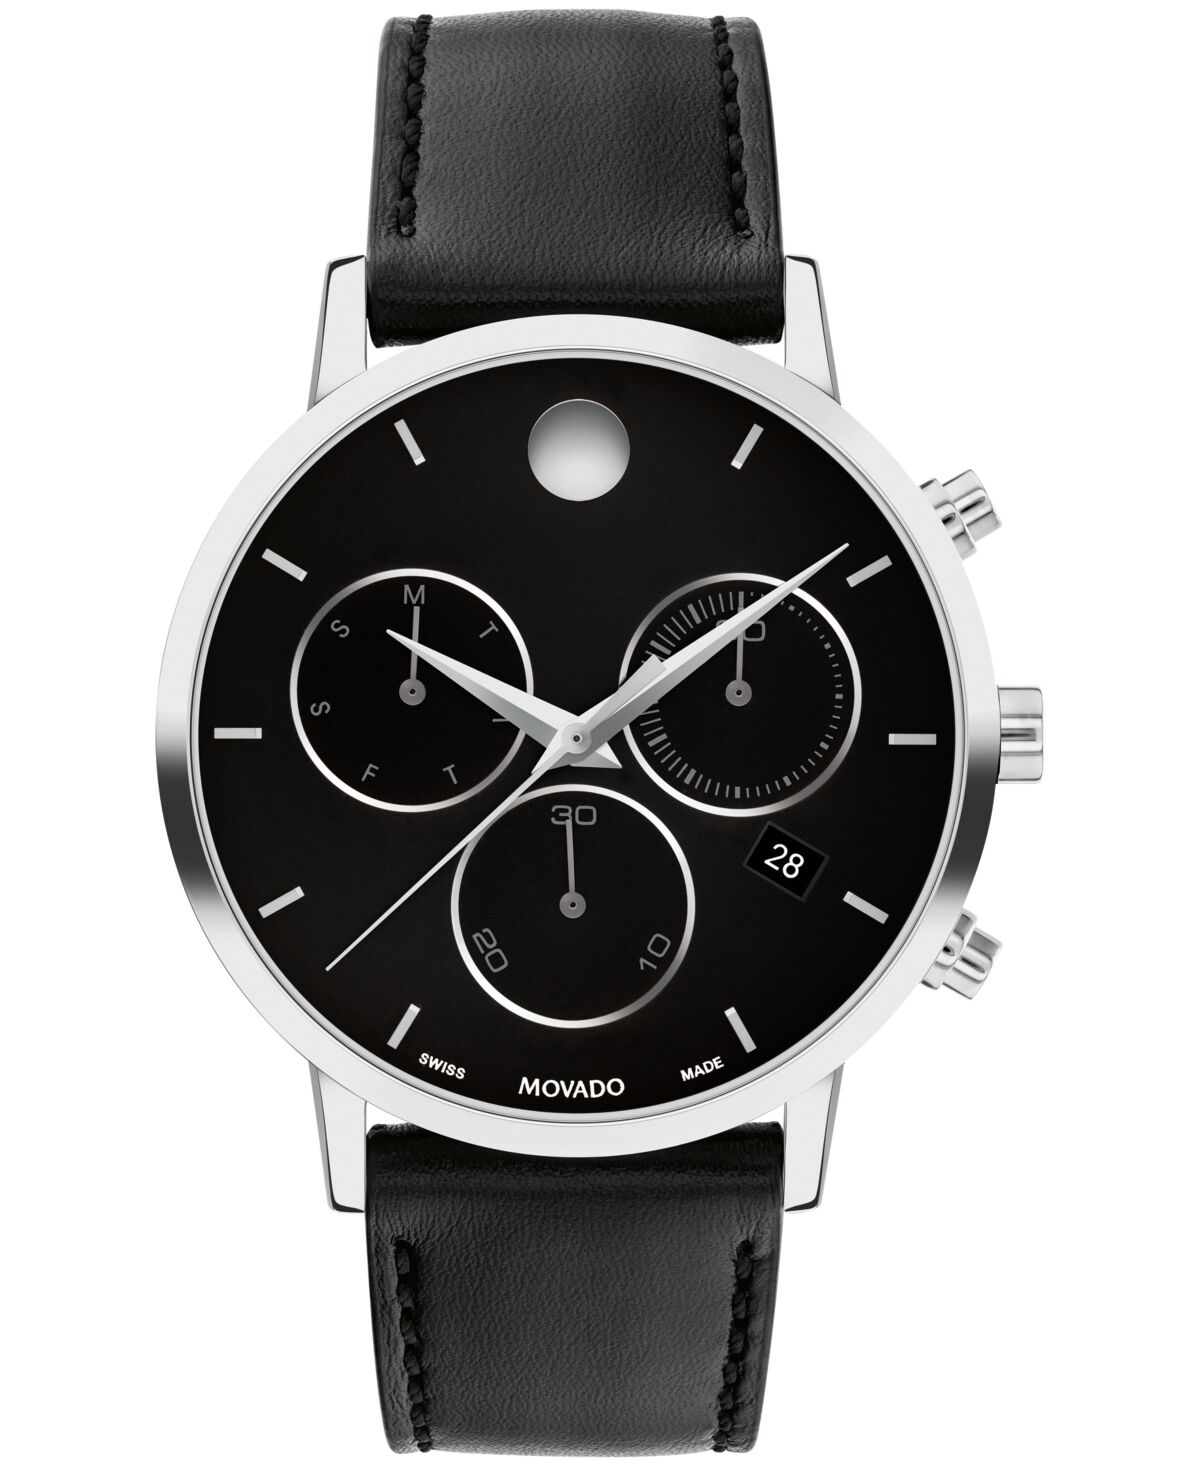 Movado Men's Museum Classic Swiss Quartz Chrono Black Leather Watch 42mm - Black